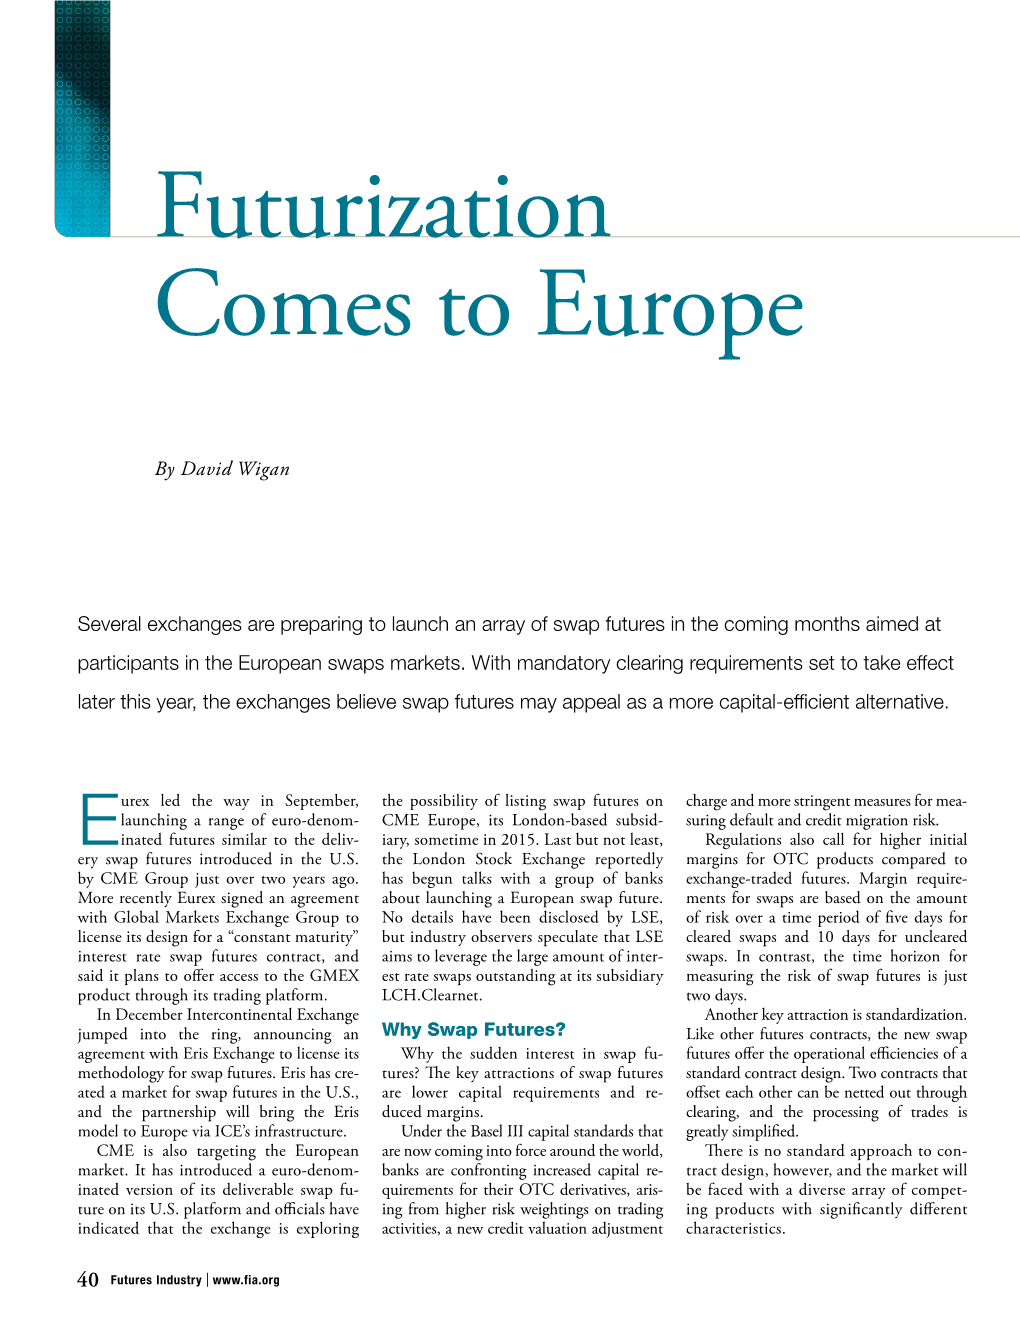 Futurization Comes to Europe